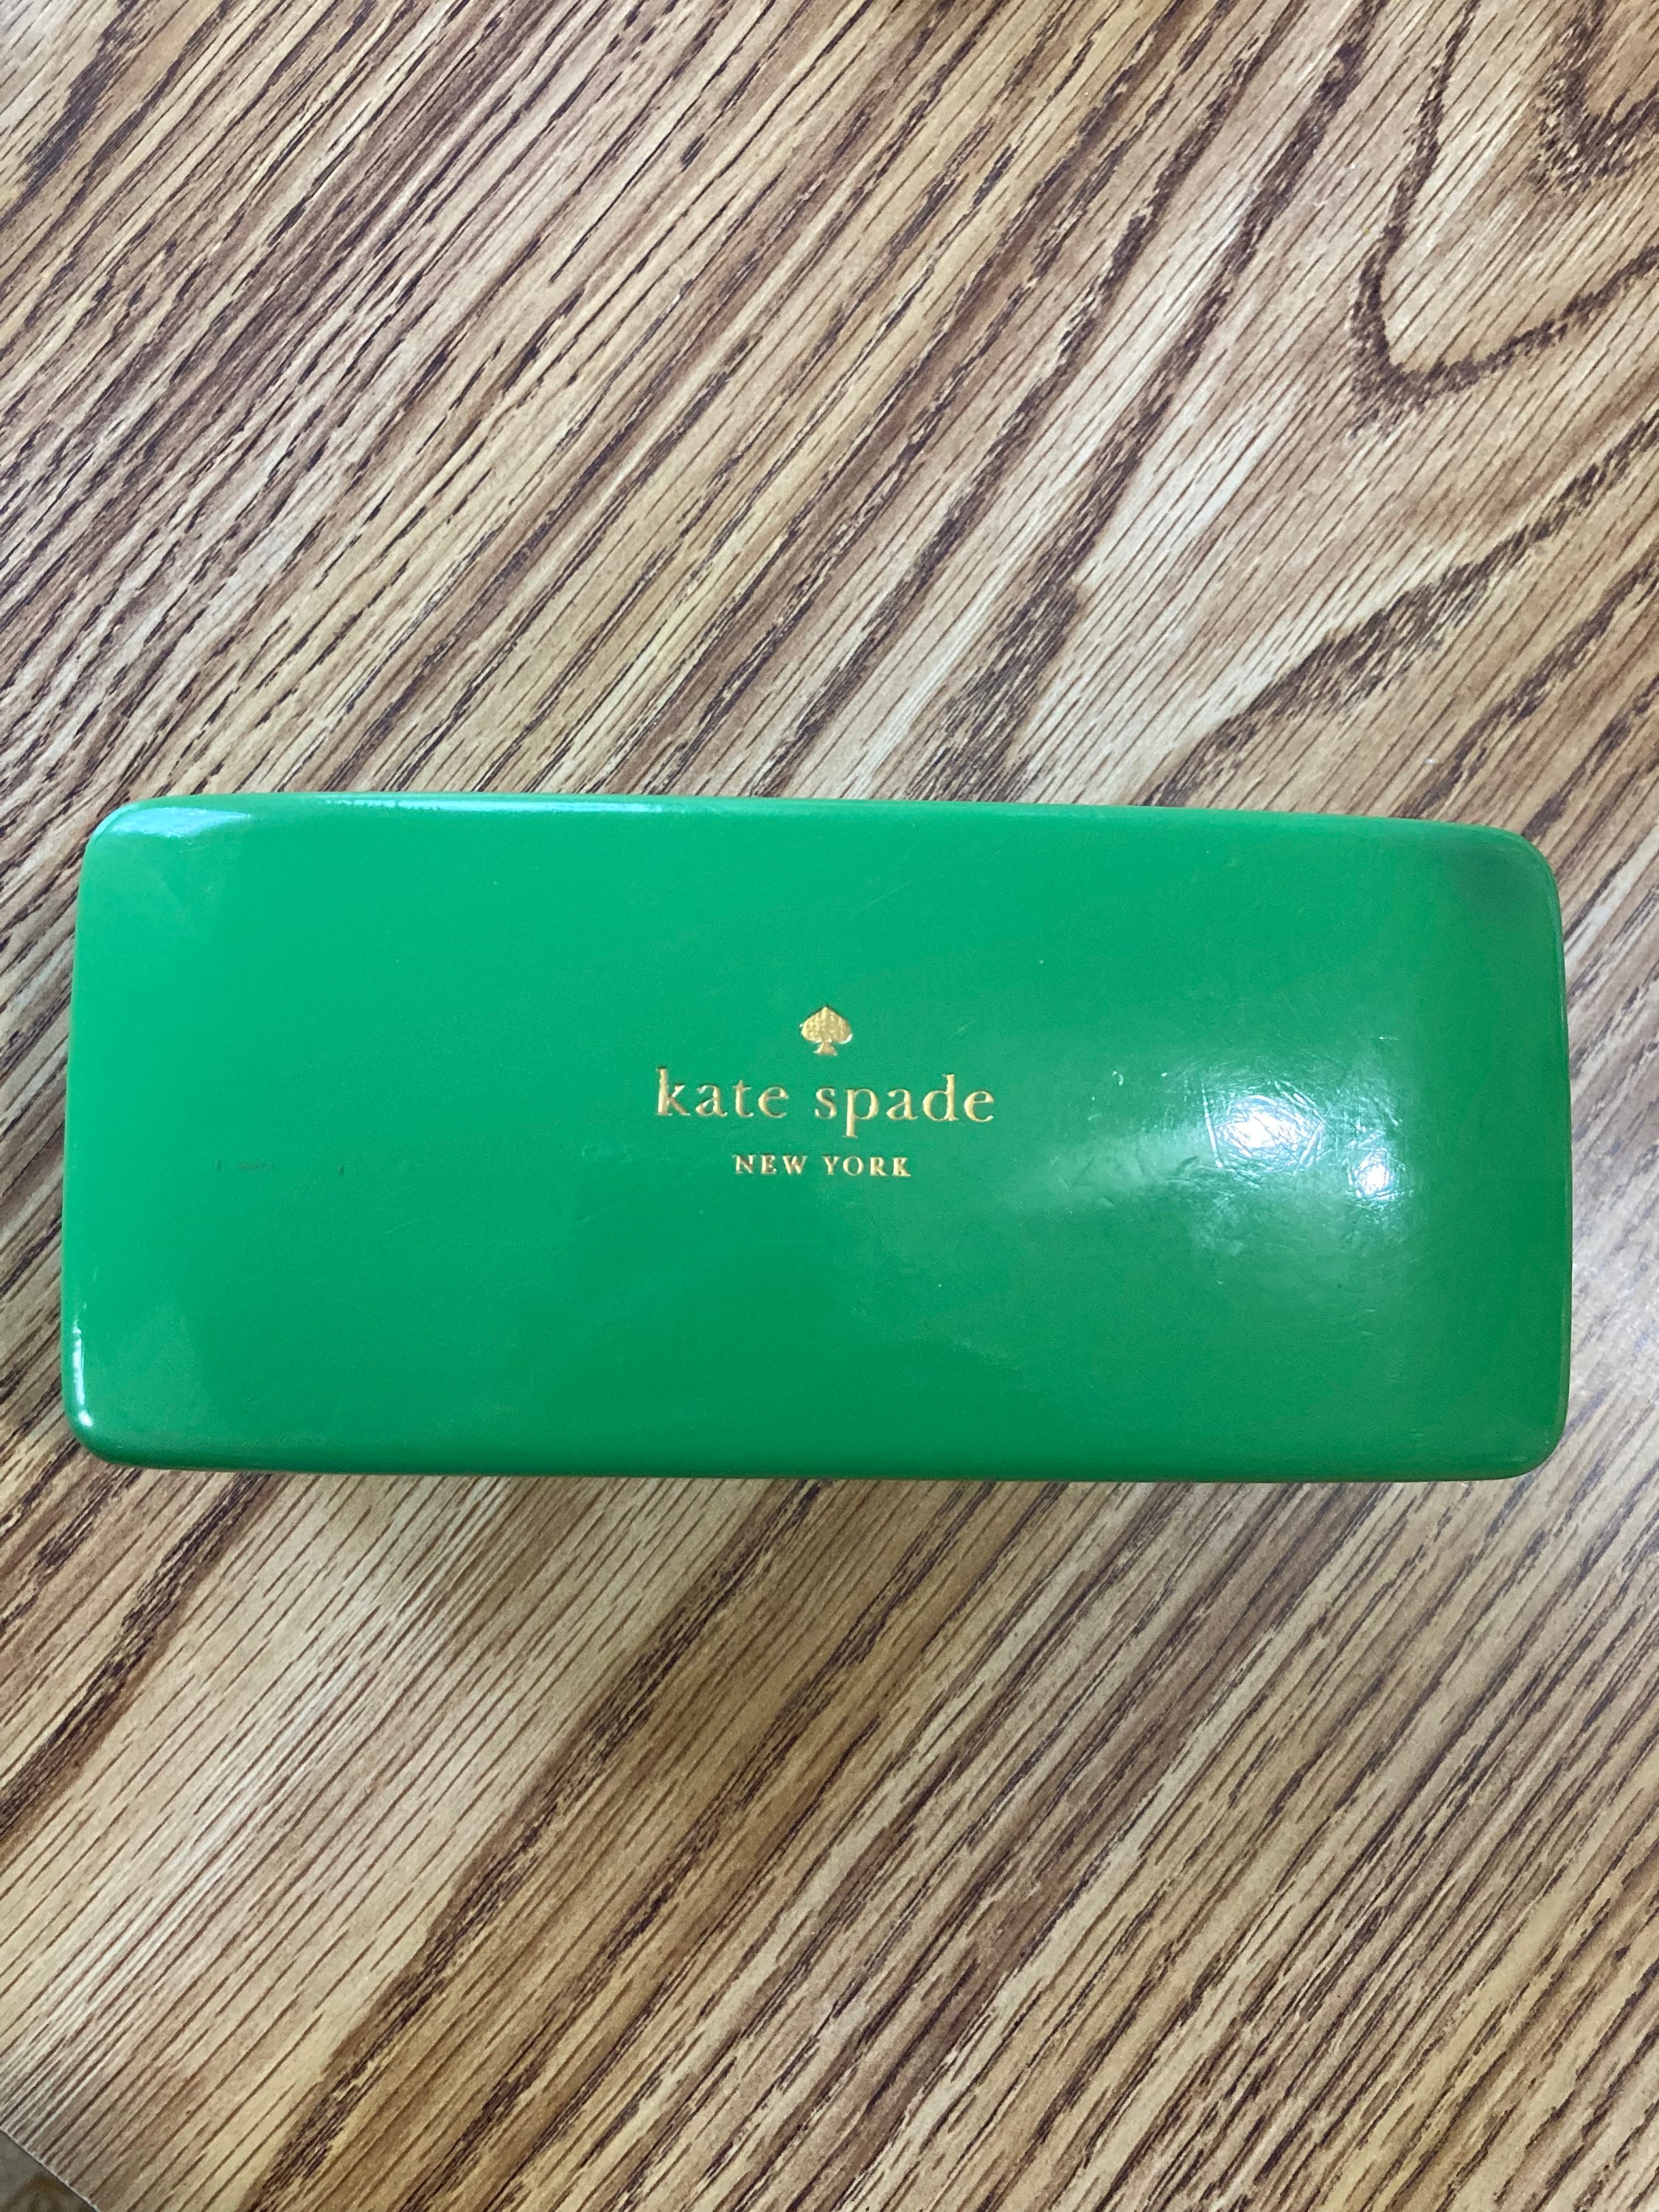 Kate Spade New York Hard Glasses/sun Glasses Case Green and Aqua